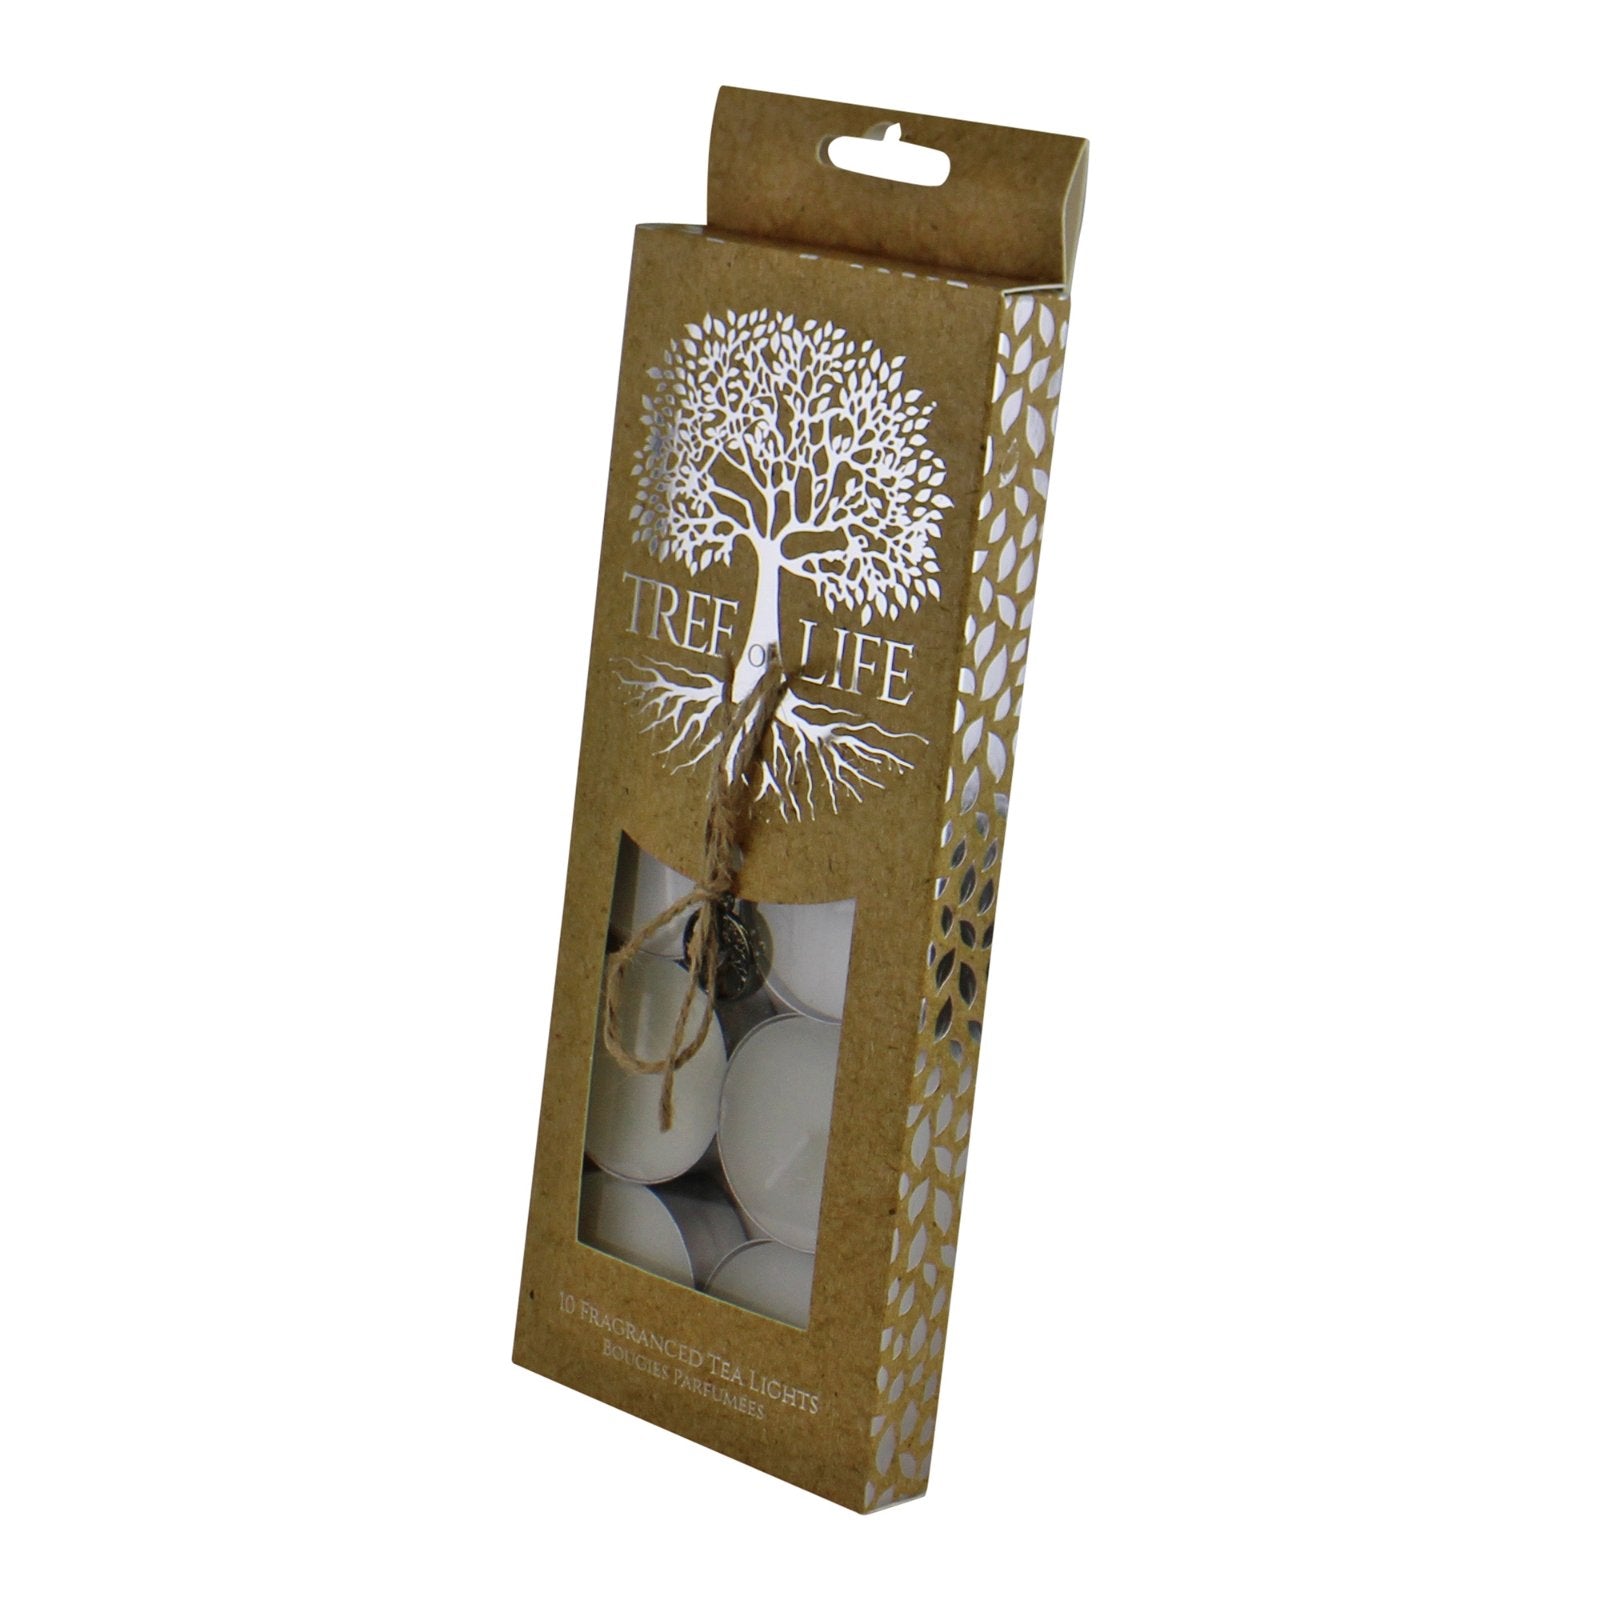 Set of 10 Tealights, Tree Of Life Design, Sandalwood Fragrance.